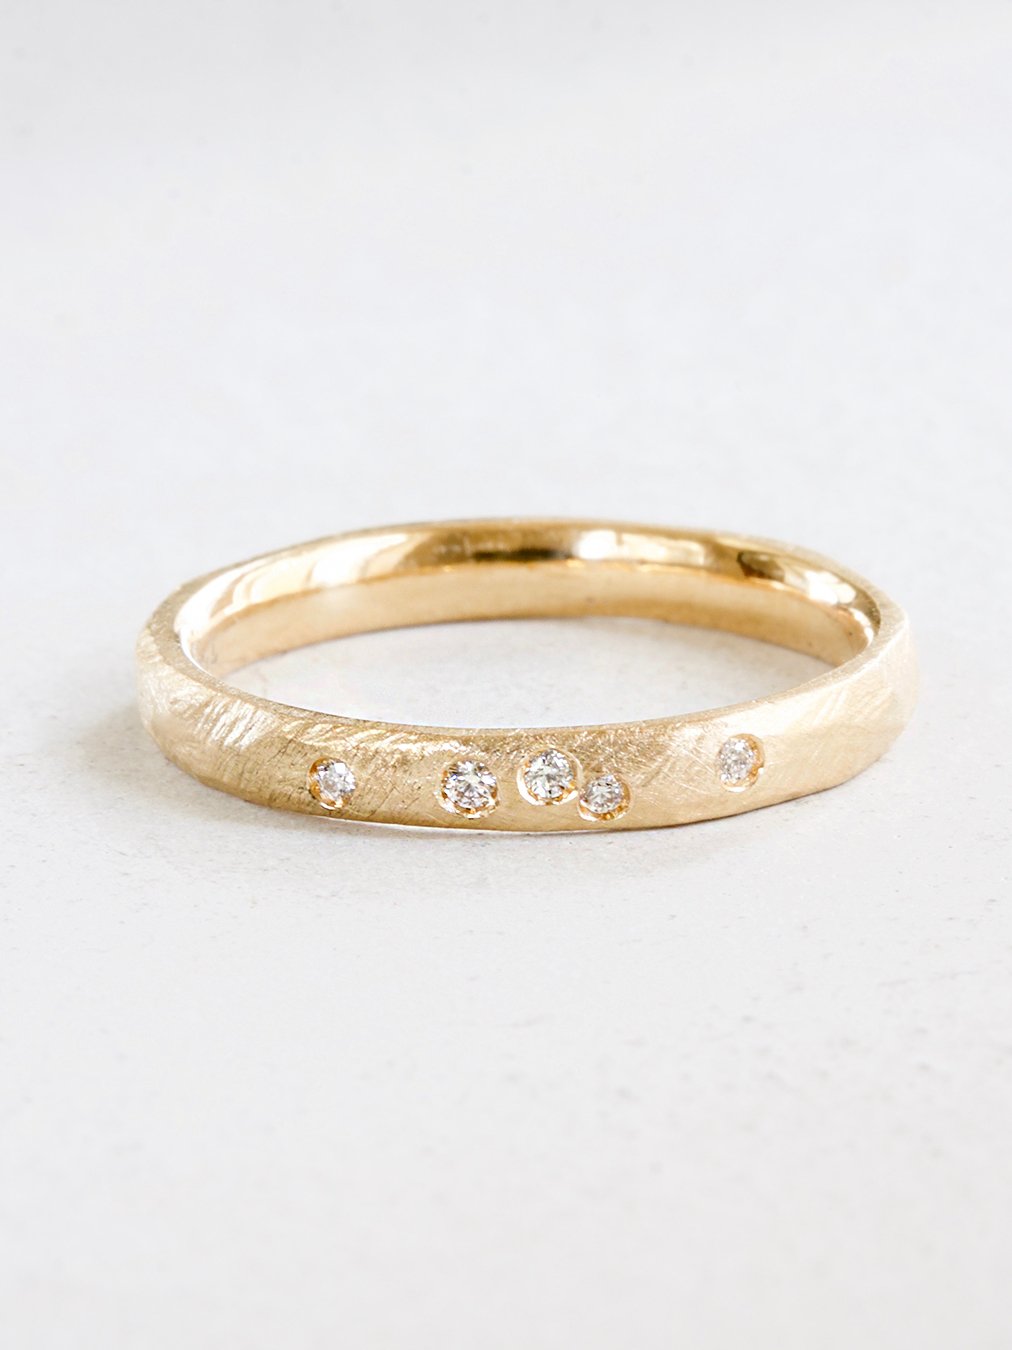 Web__0002_Ring Verlobungsring Roségold grob gefeilt mit Flächen, Diamanten gestreut 67q.jpg